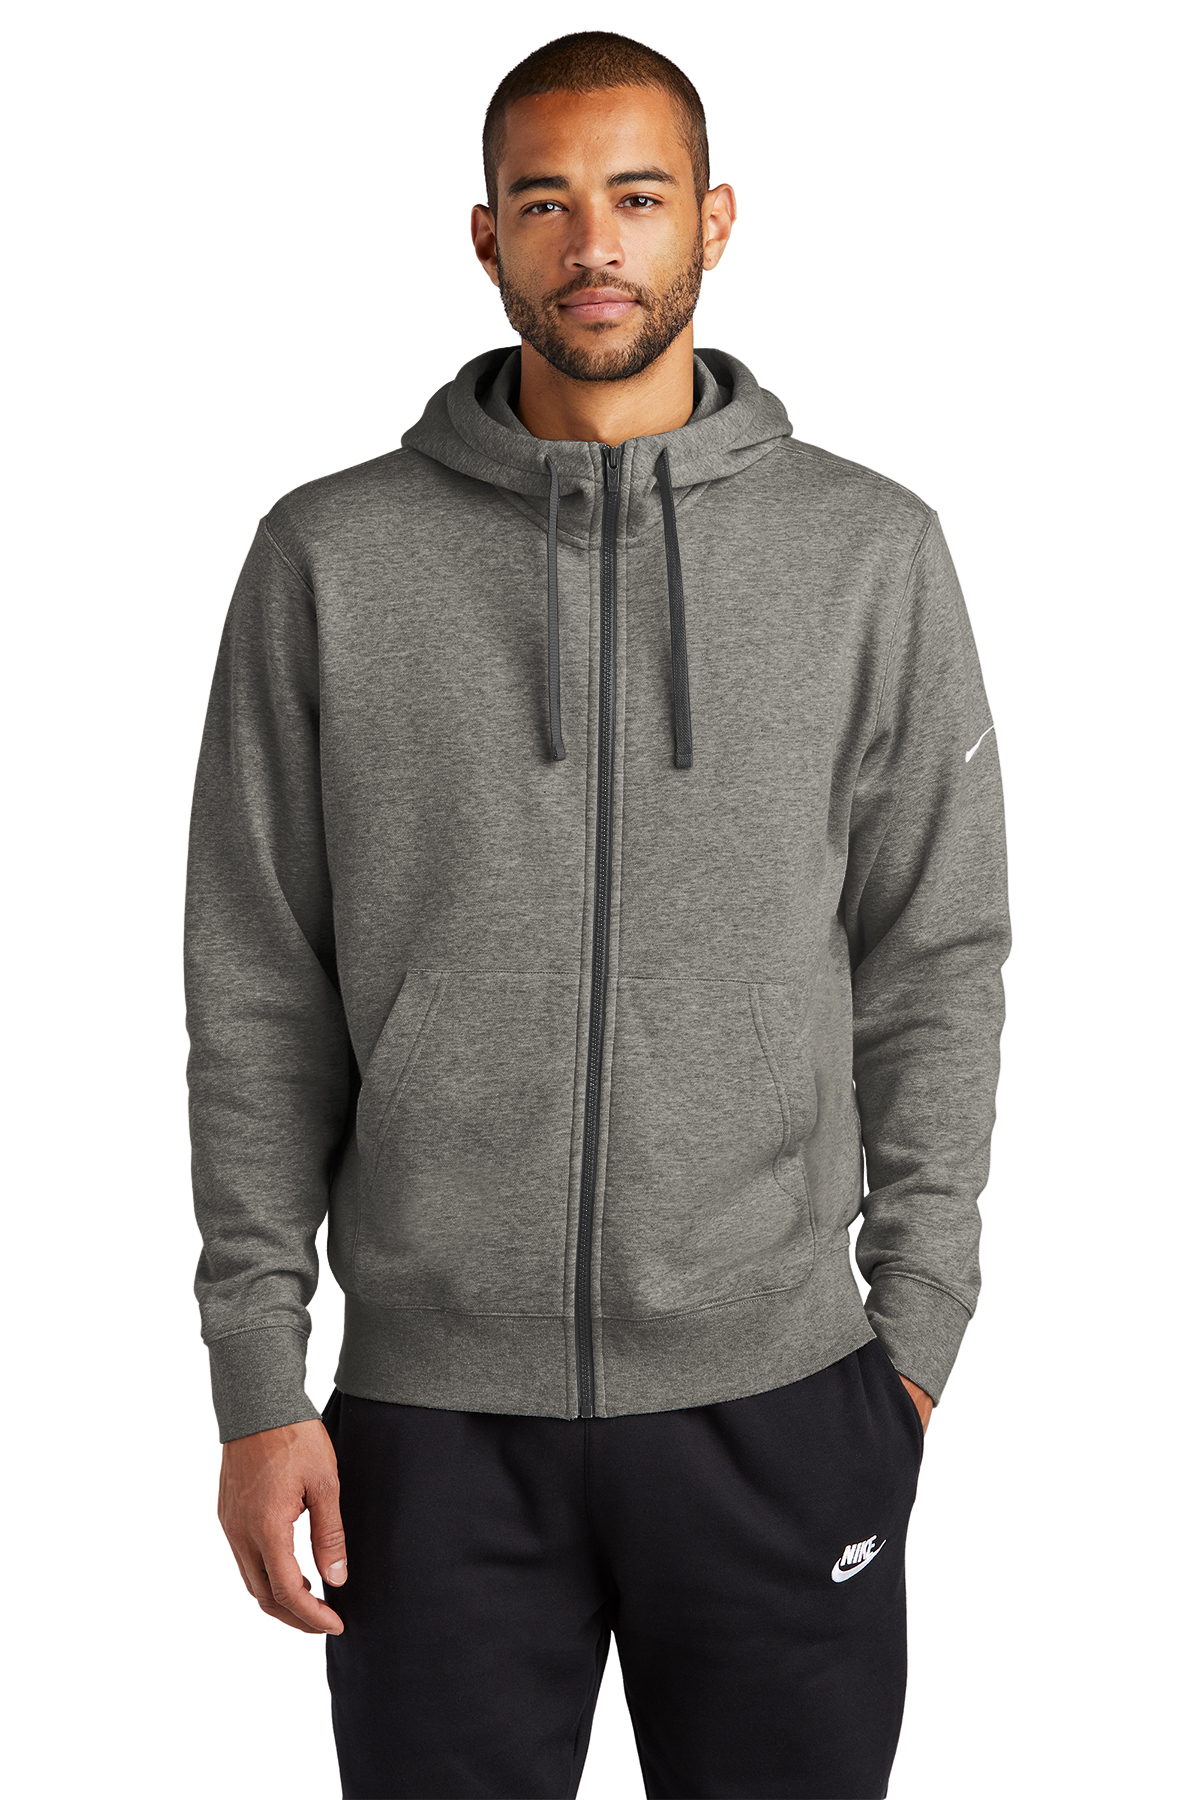  Nike Club Fleece Sleeve Swoosh 1/2-Zip Pullover